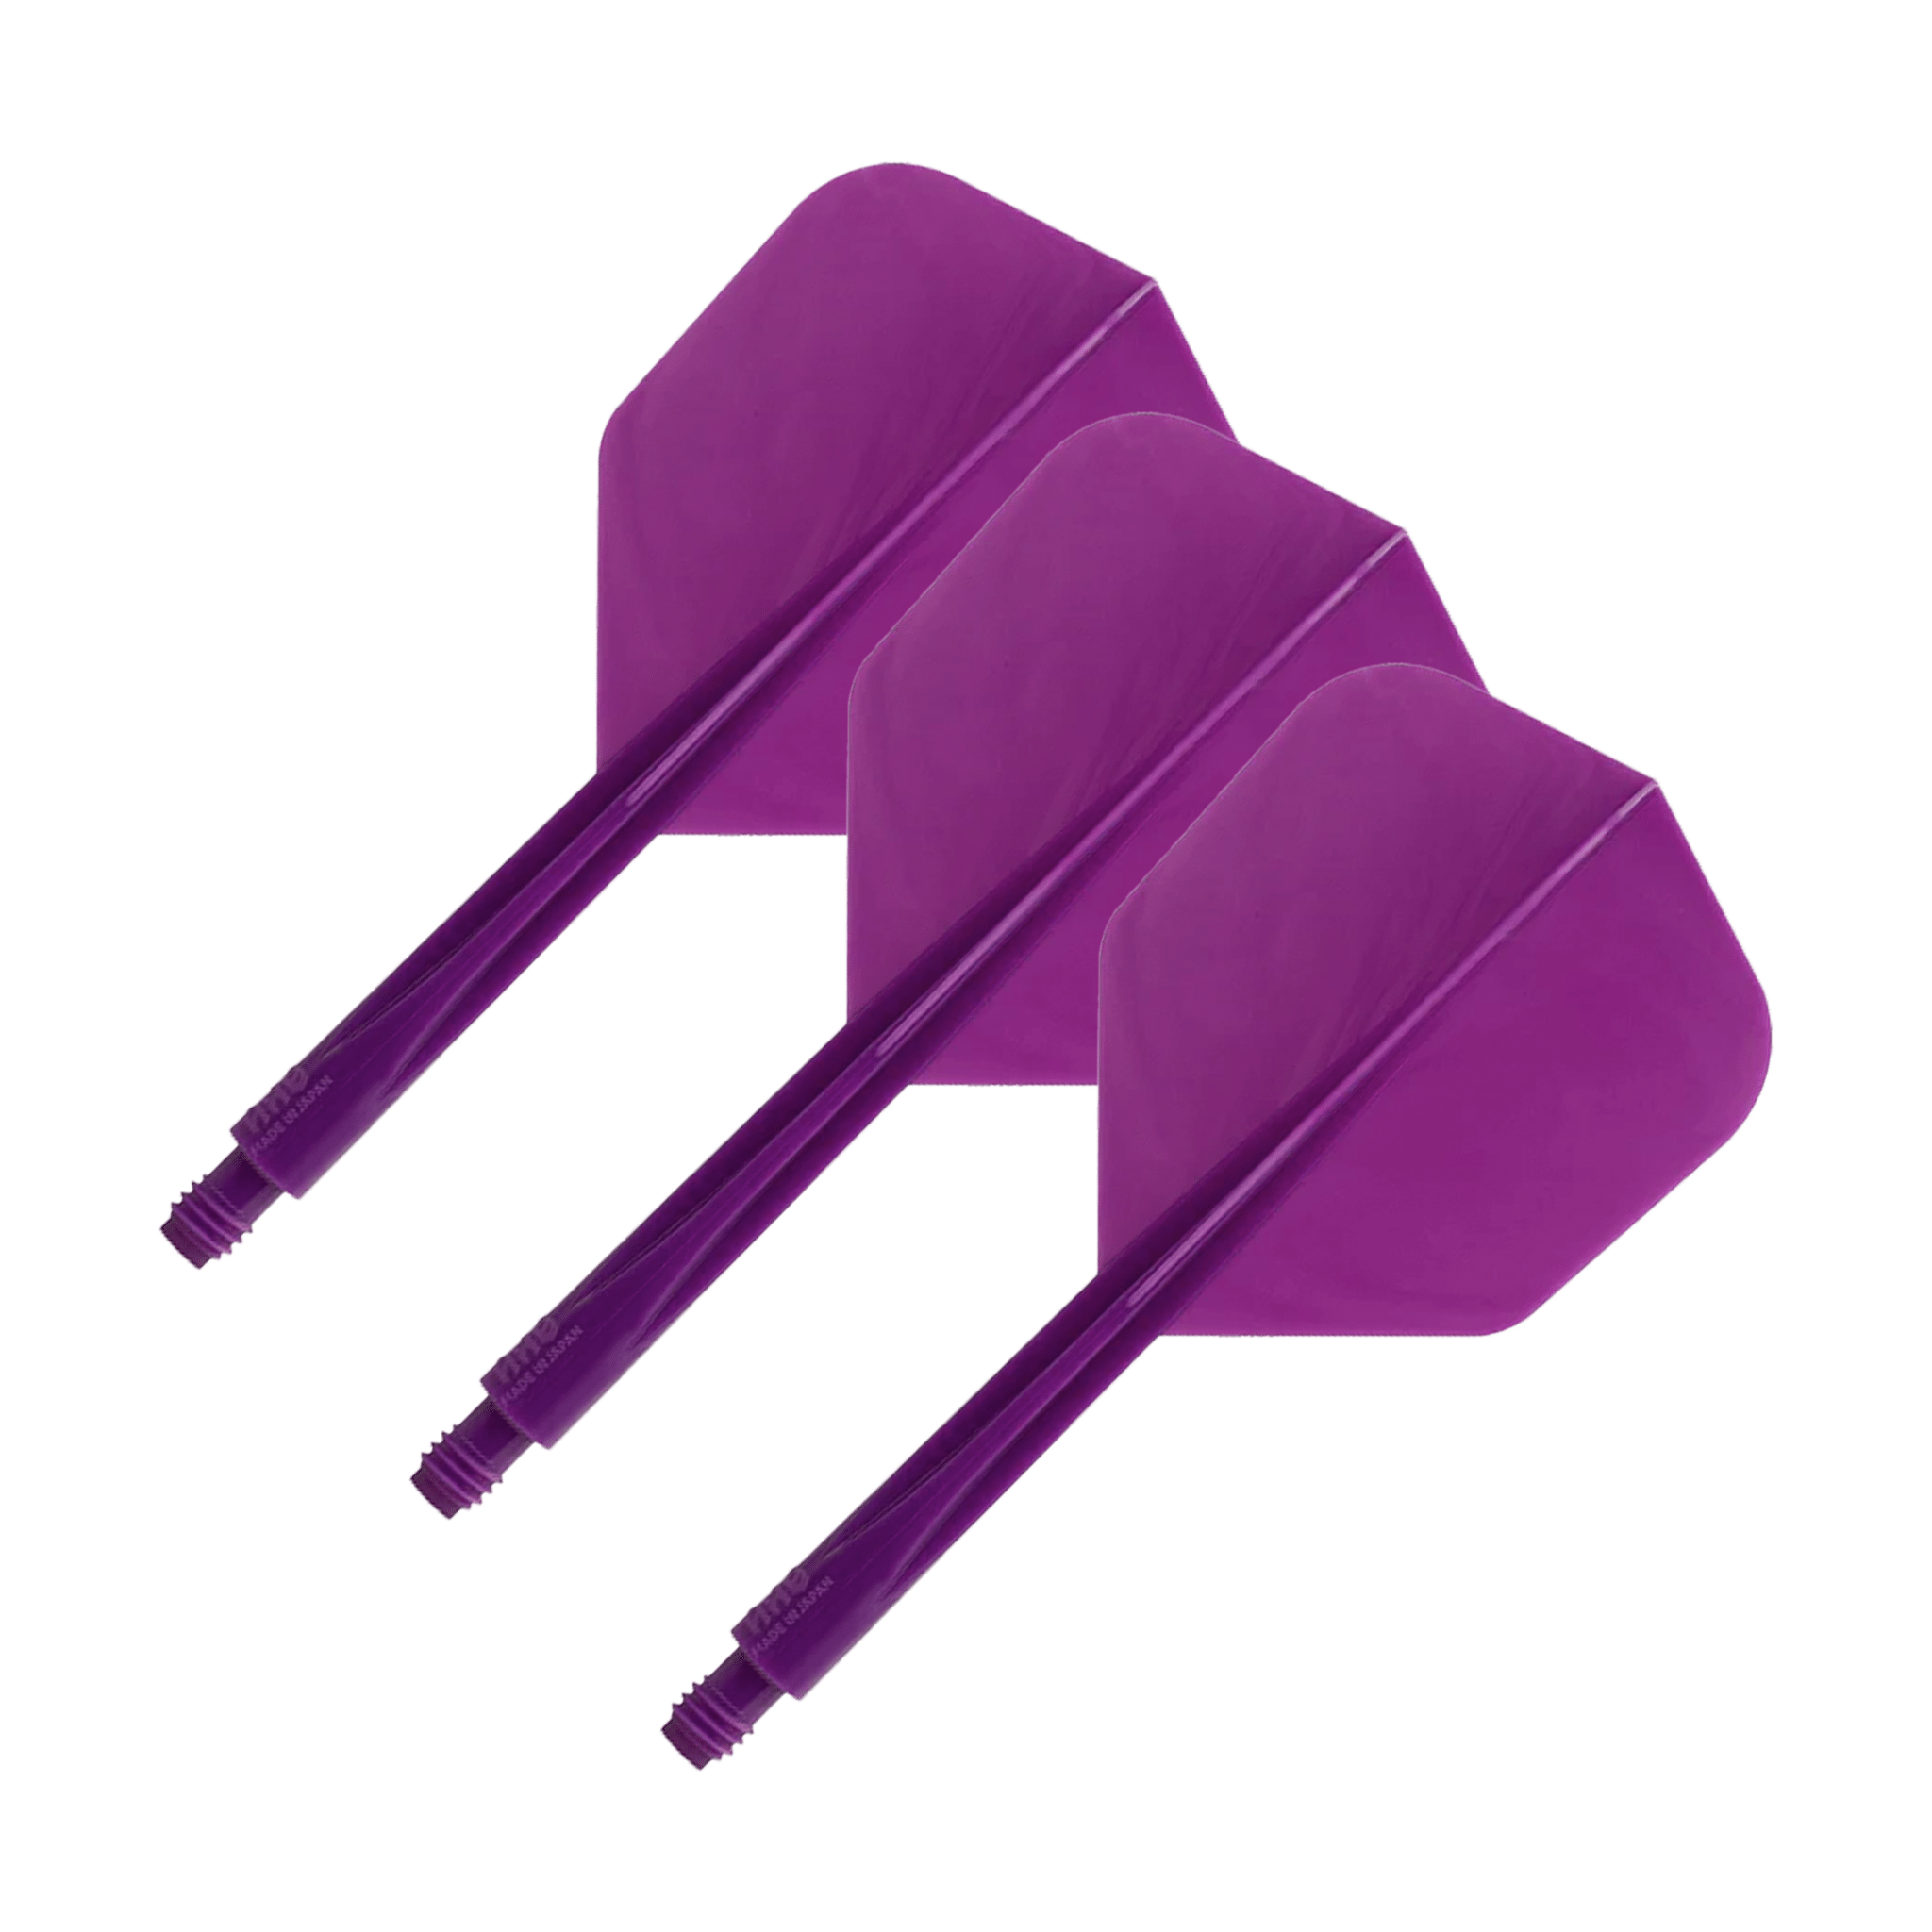 Condor Axe - Resin Dart Shafts Standard / Short (21.5mm) / Purple Shafts